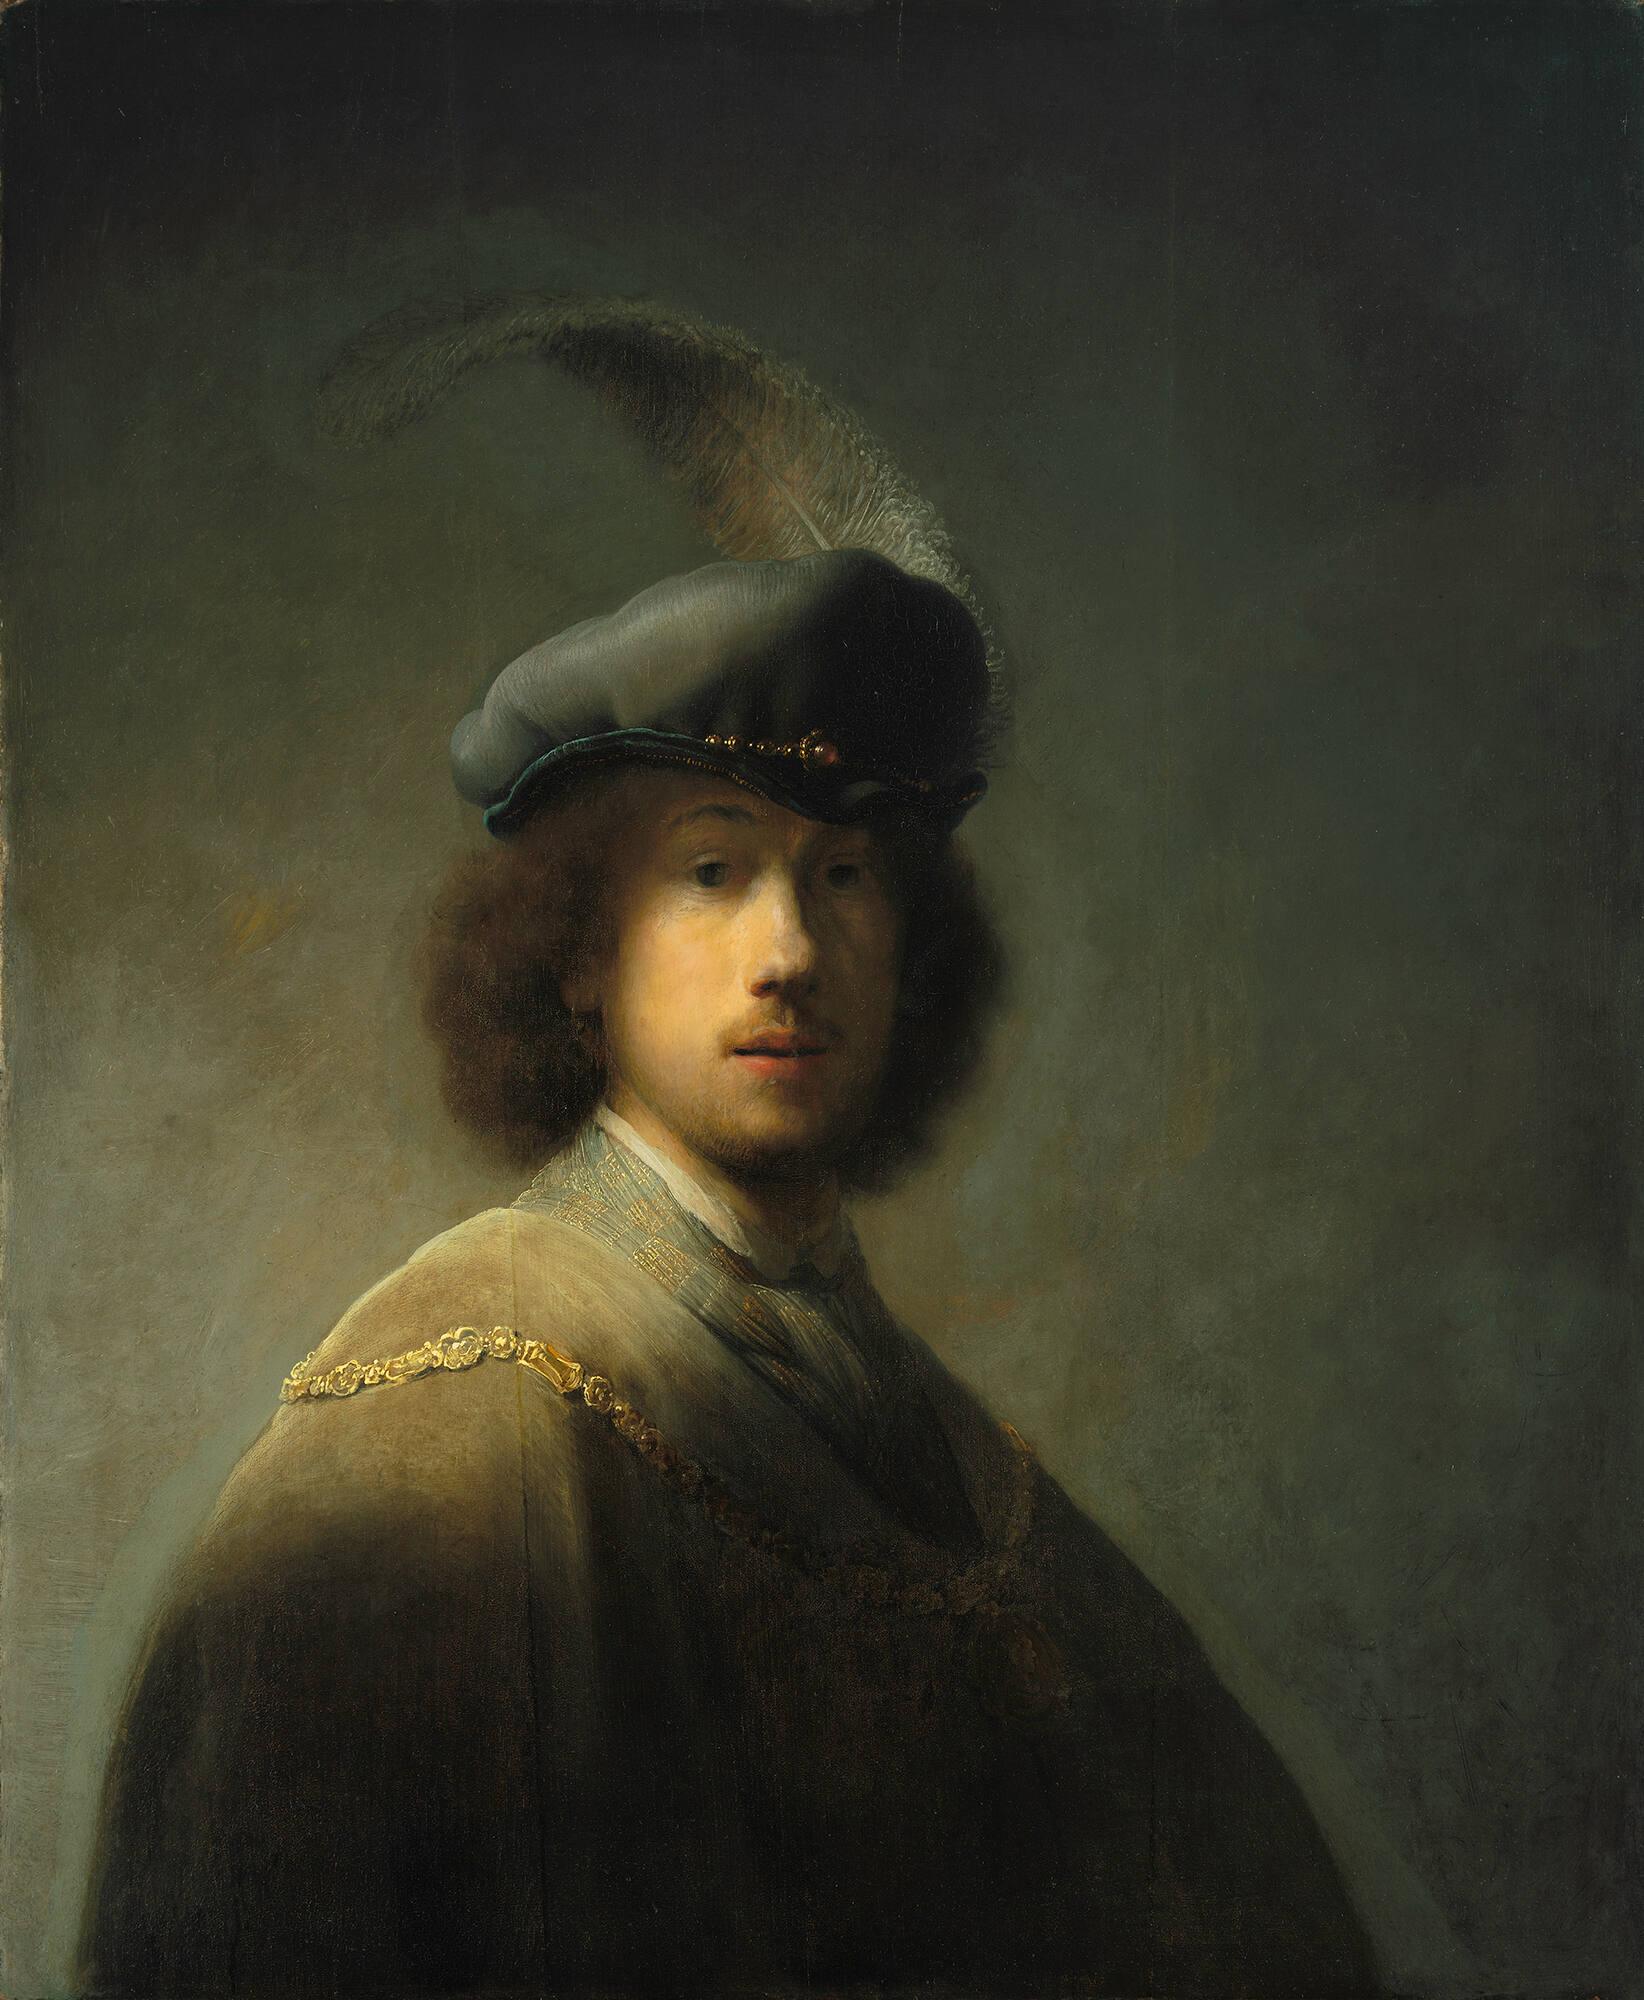 Rembrandt, Self-Portrait, Age 23, 1629, oil on oak panel, 89.7 x 73.5 cm (Isabella Stewart Gardner Museum)